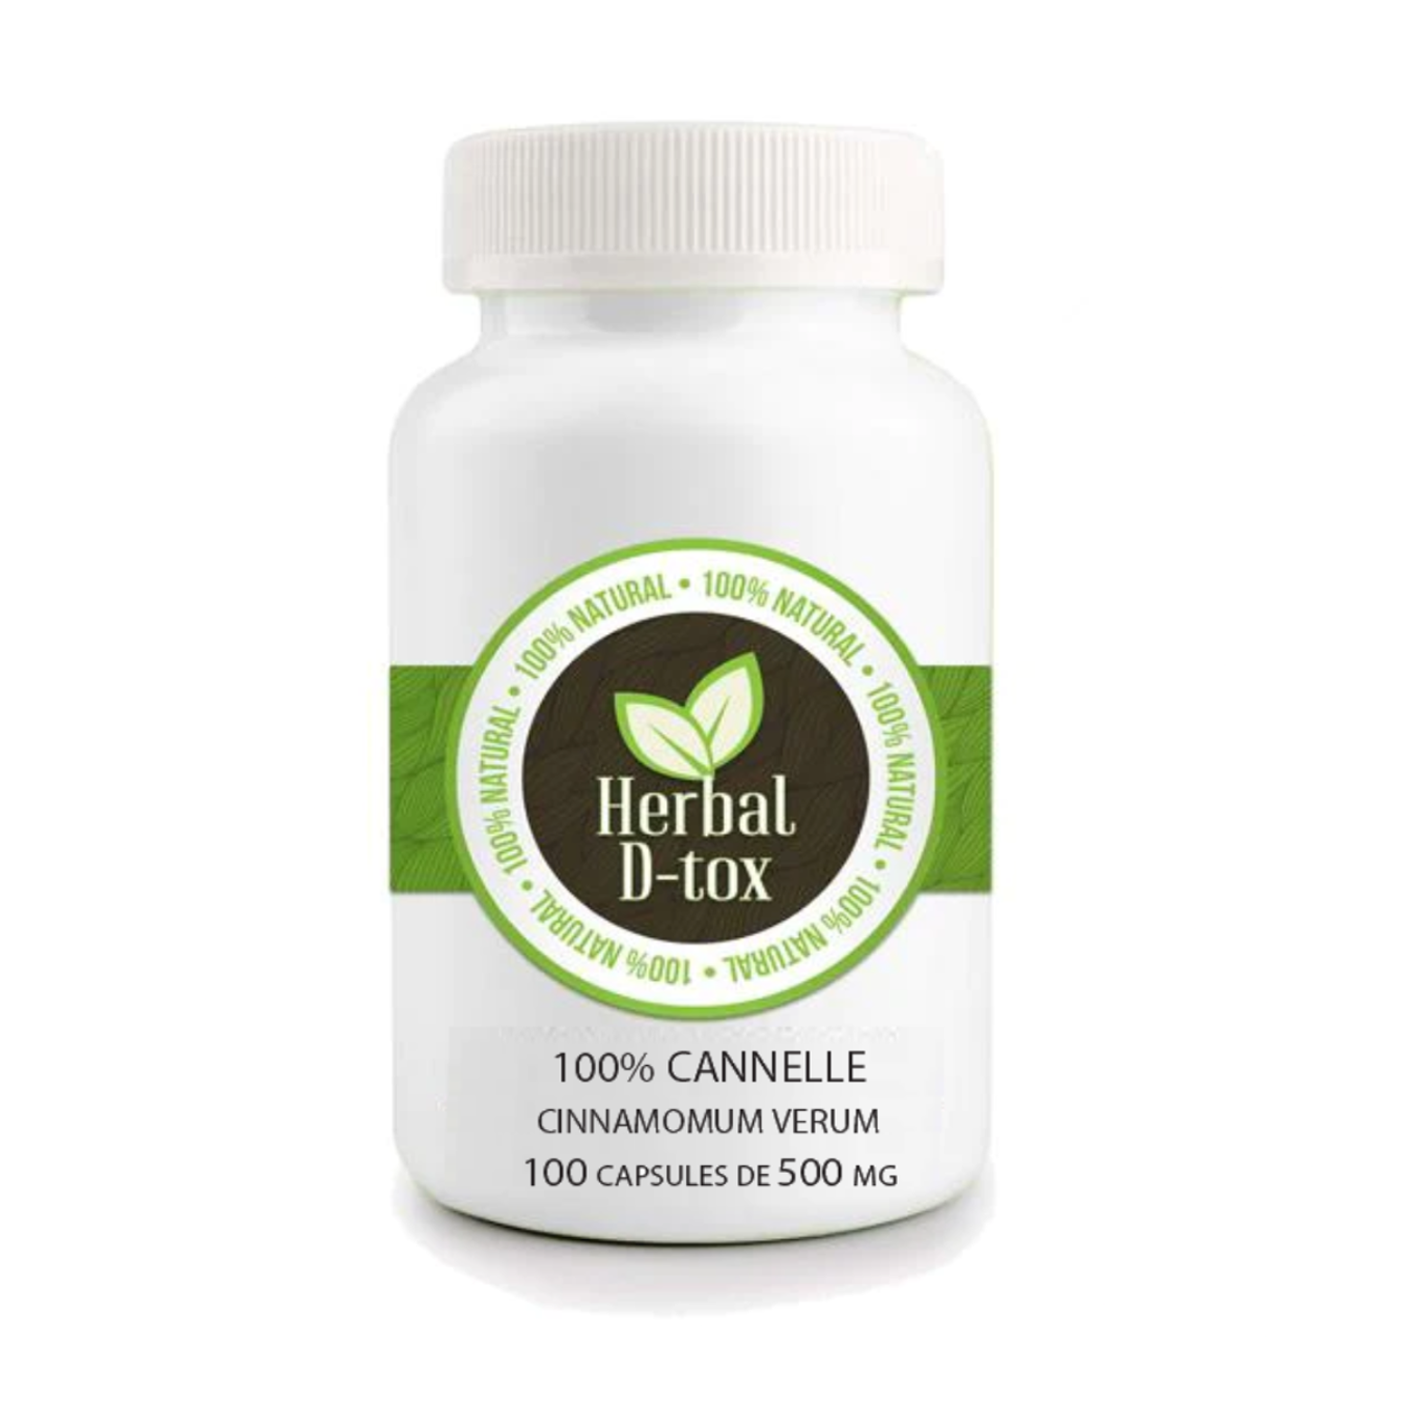 Cannelle (Cinnamomum verum) - Boite de 100 capsules de 500mg – Herbal D-tox  🍃